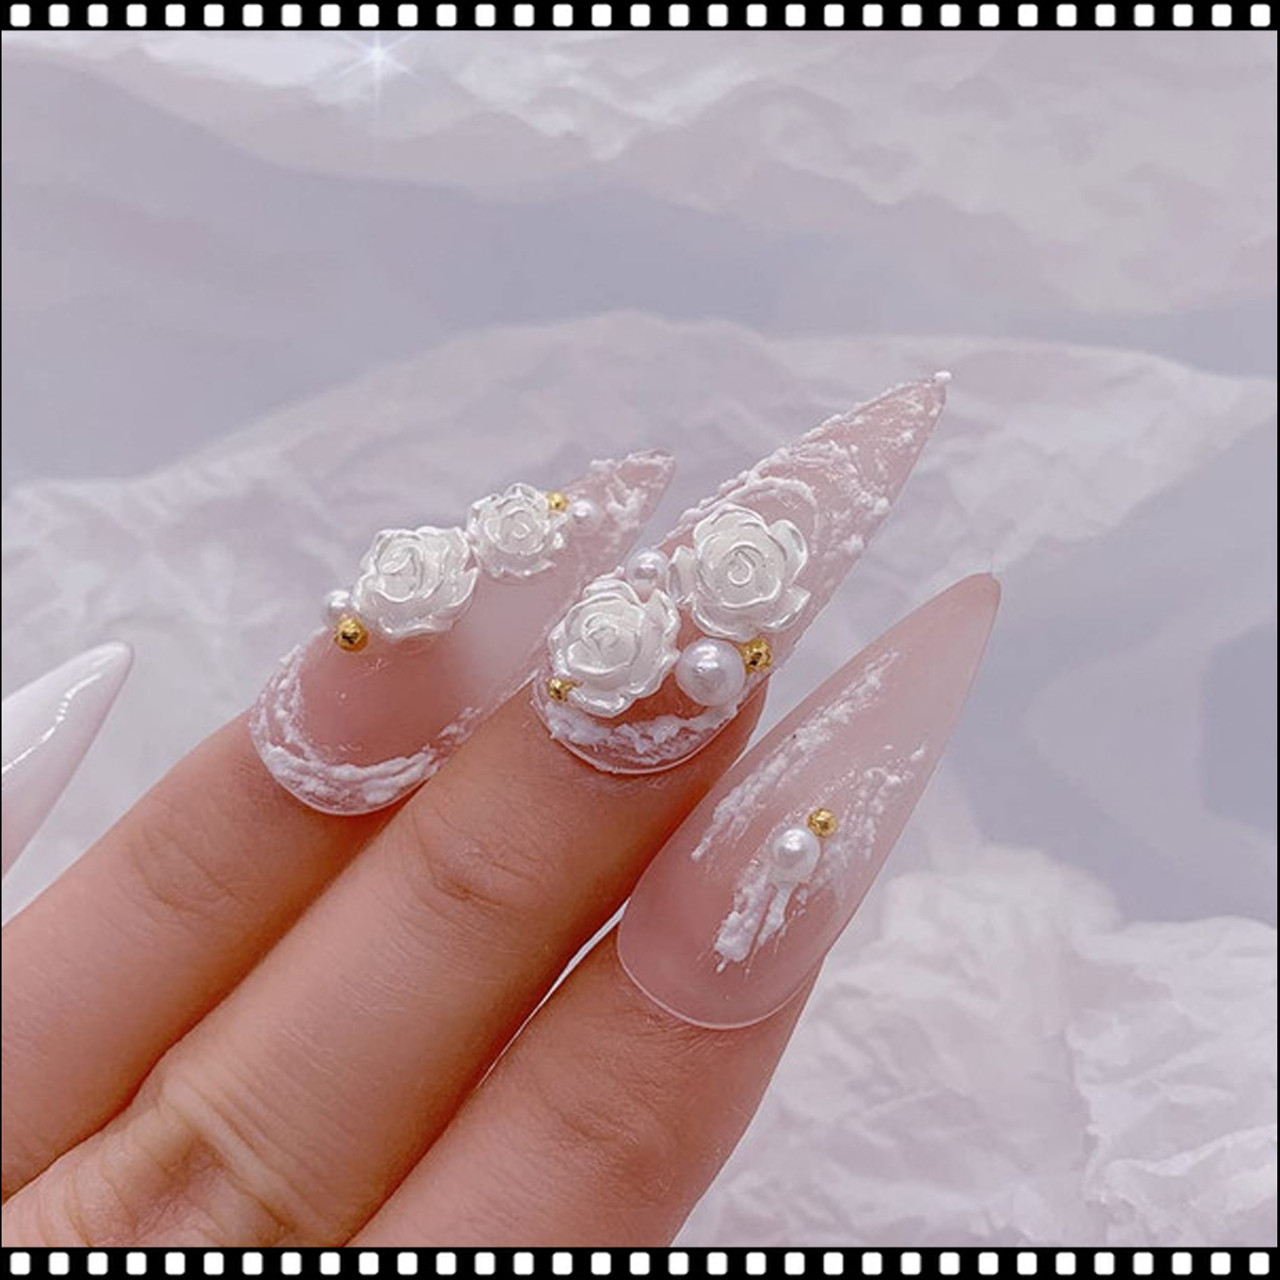 15pcs Iridescent Pearly White Heart Shaped Nail Charms Nails Art